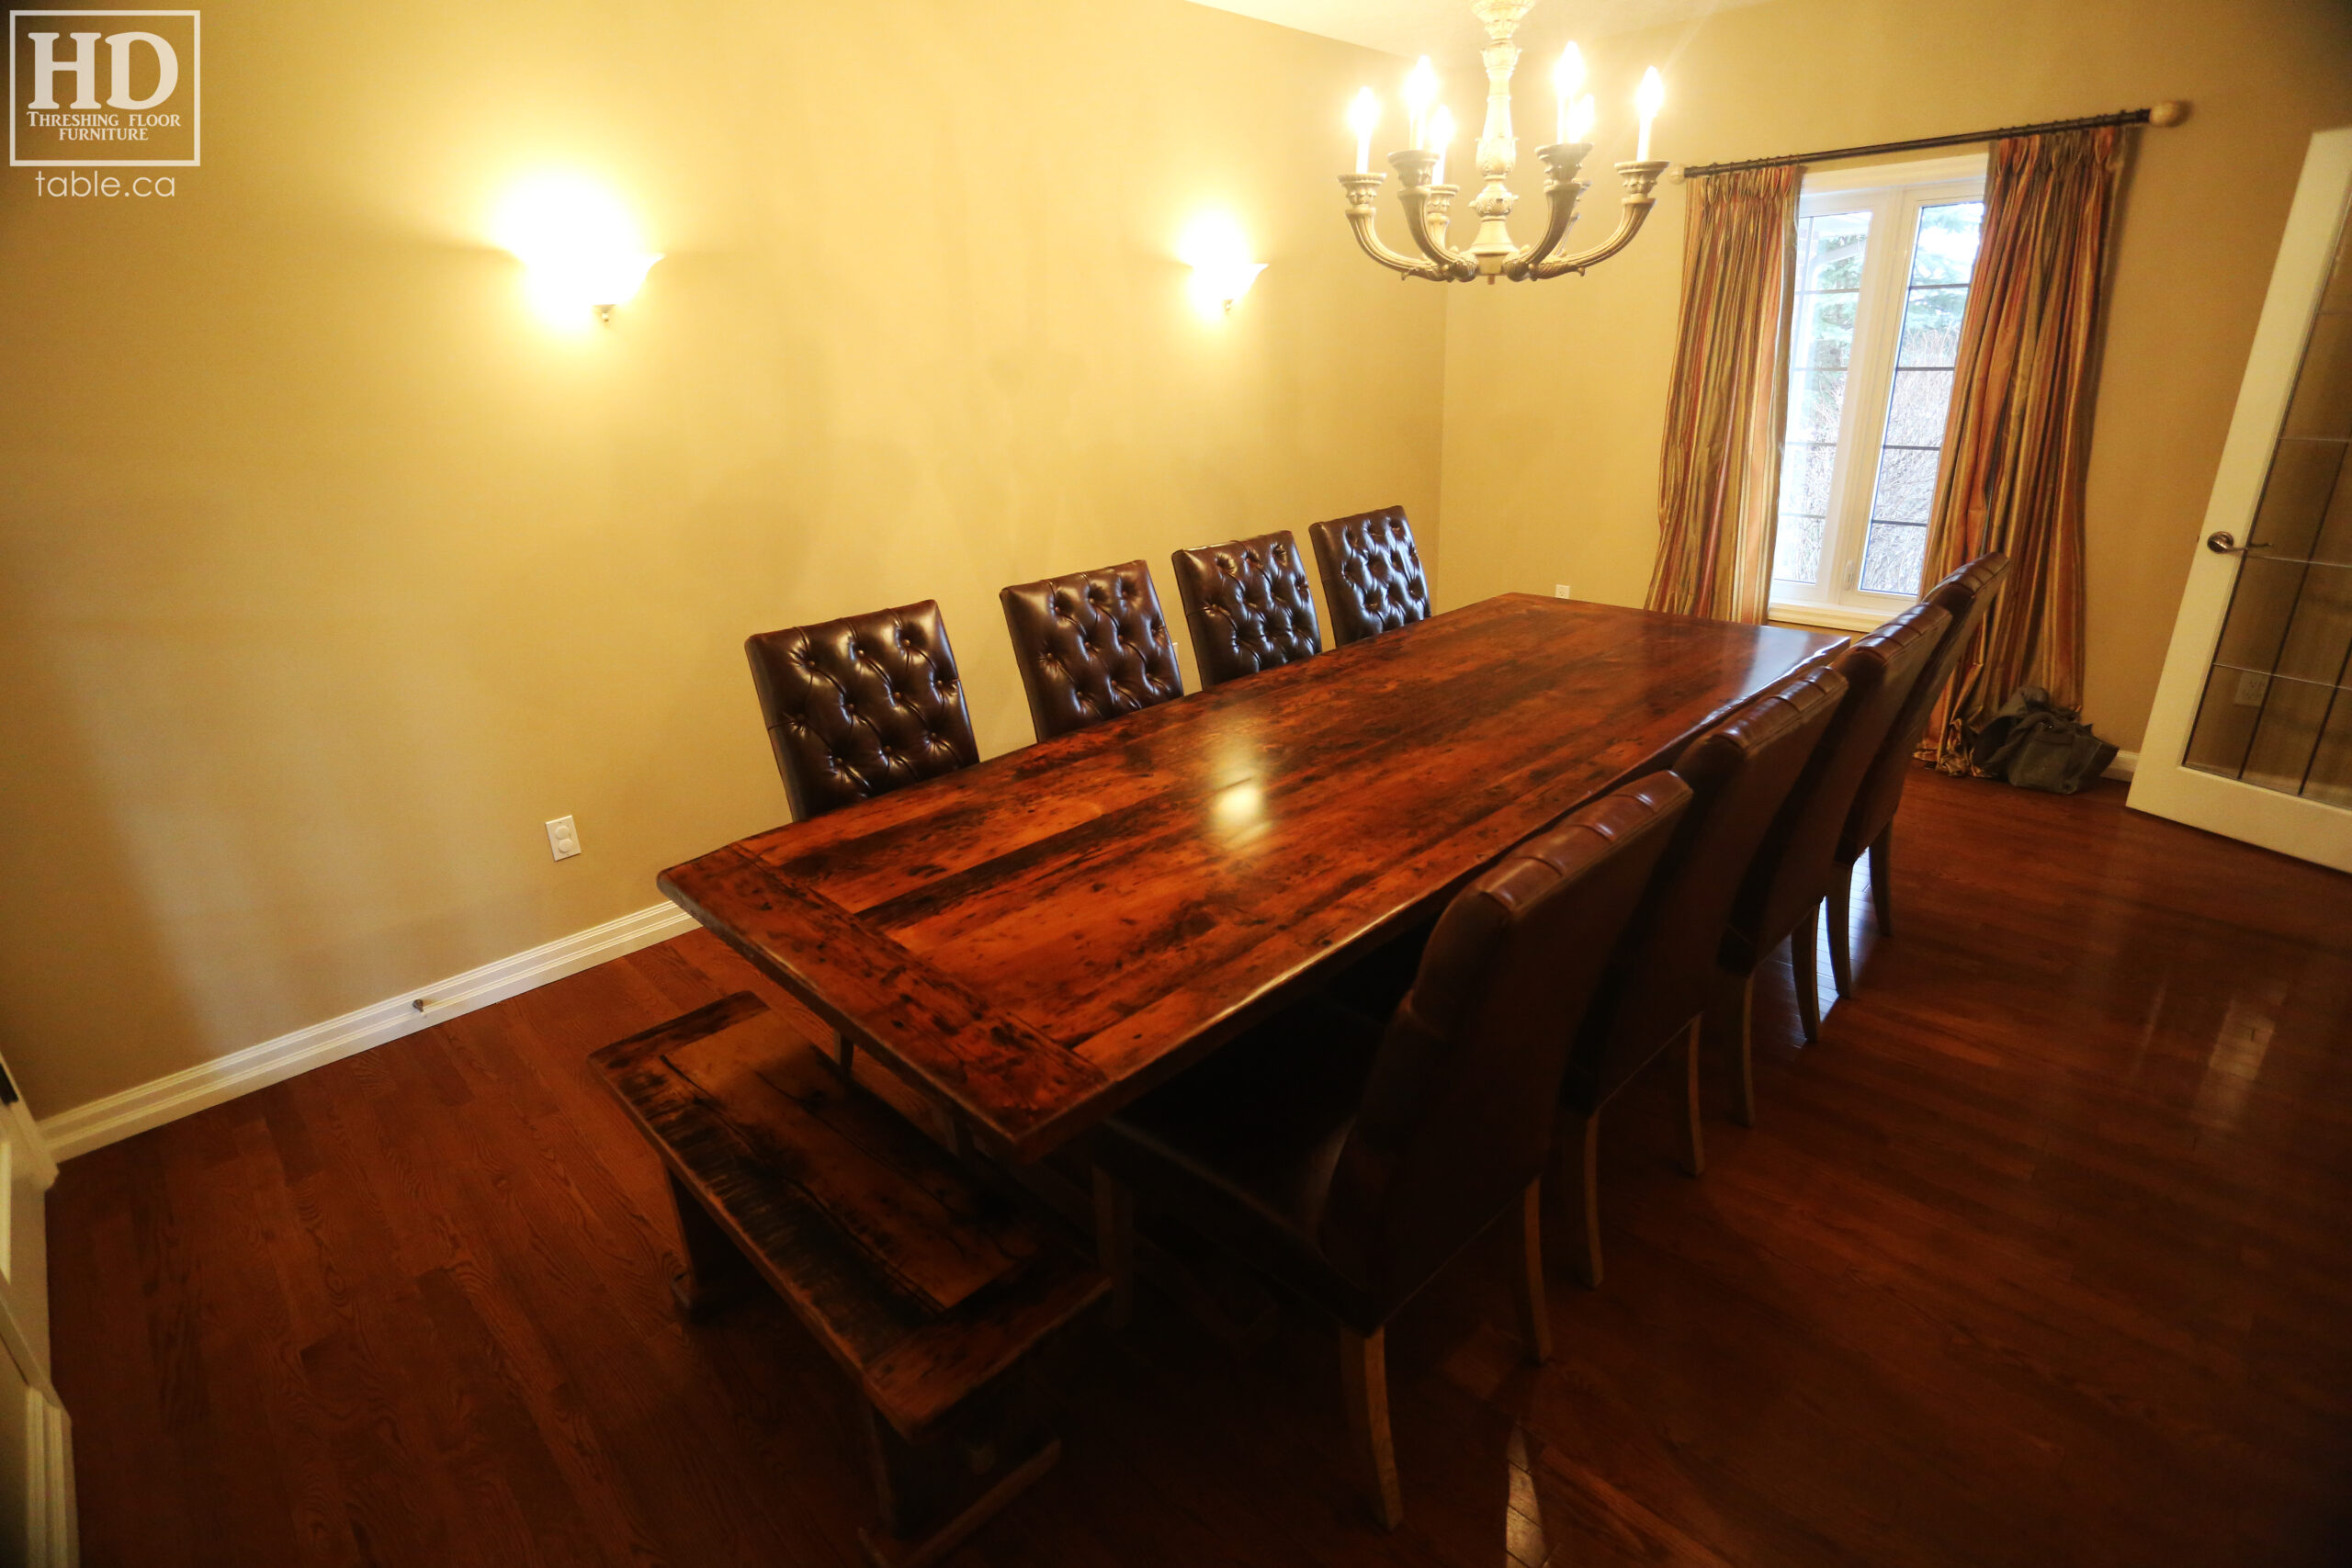 Reclaimed Wood Table by HD Threshing Floor Furniture / www.table.ca